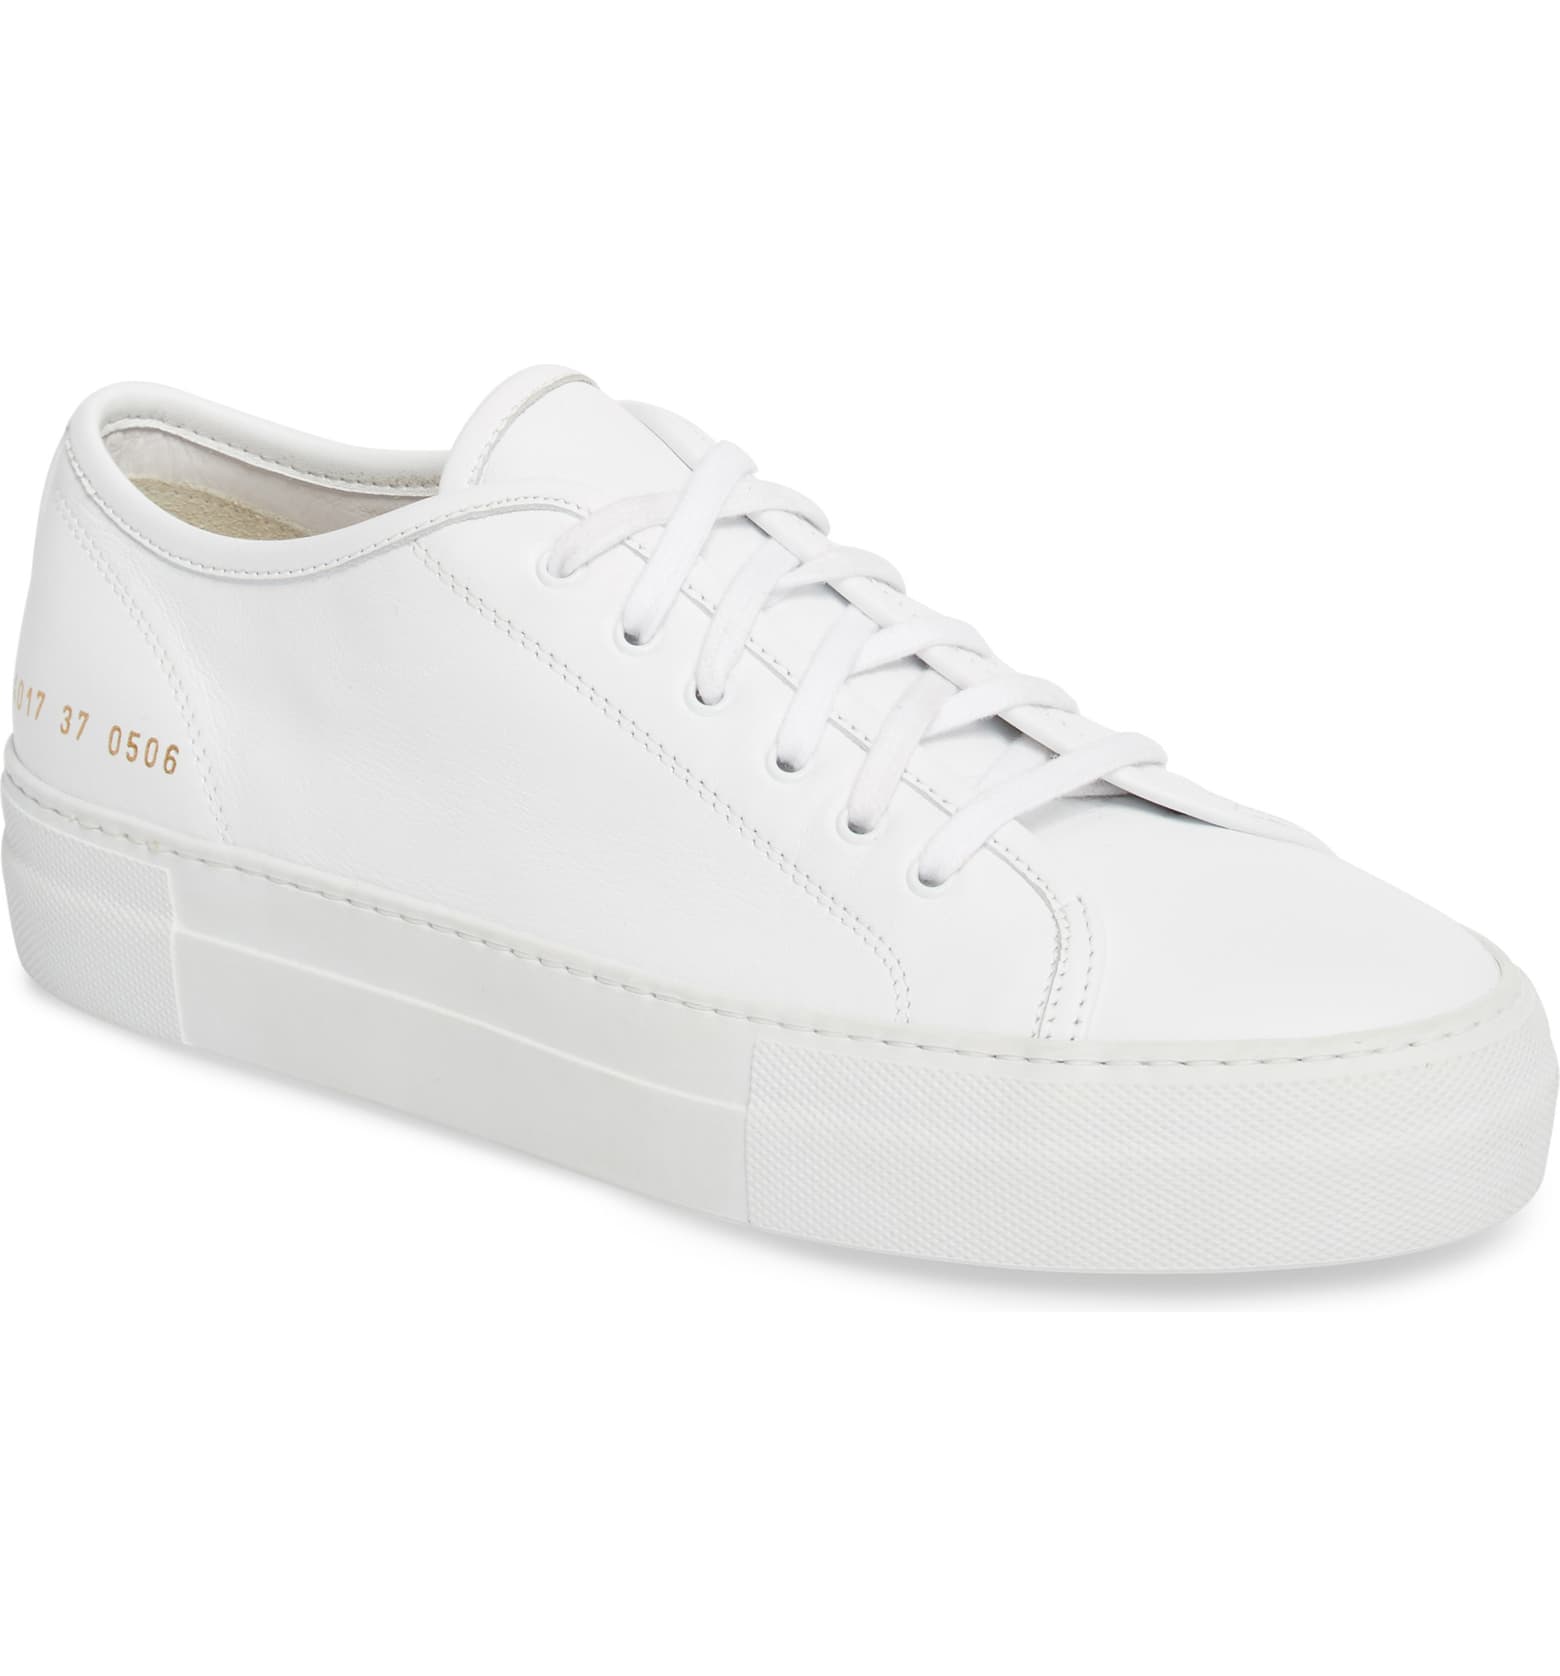 plain white sneakers womens